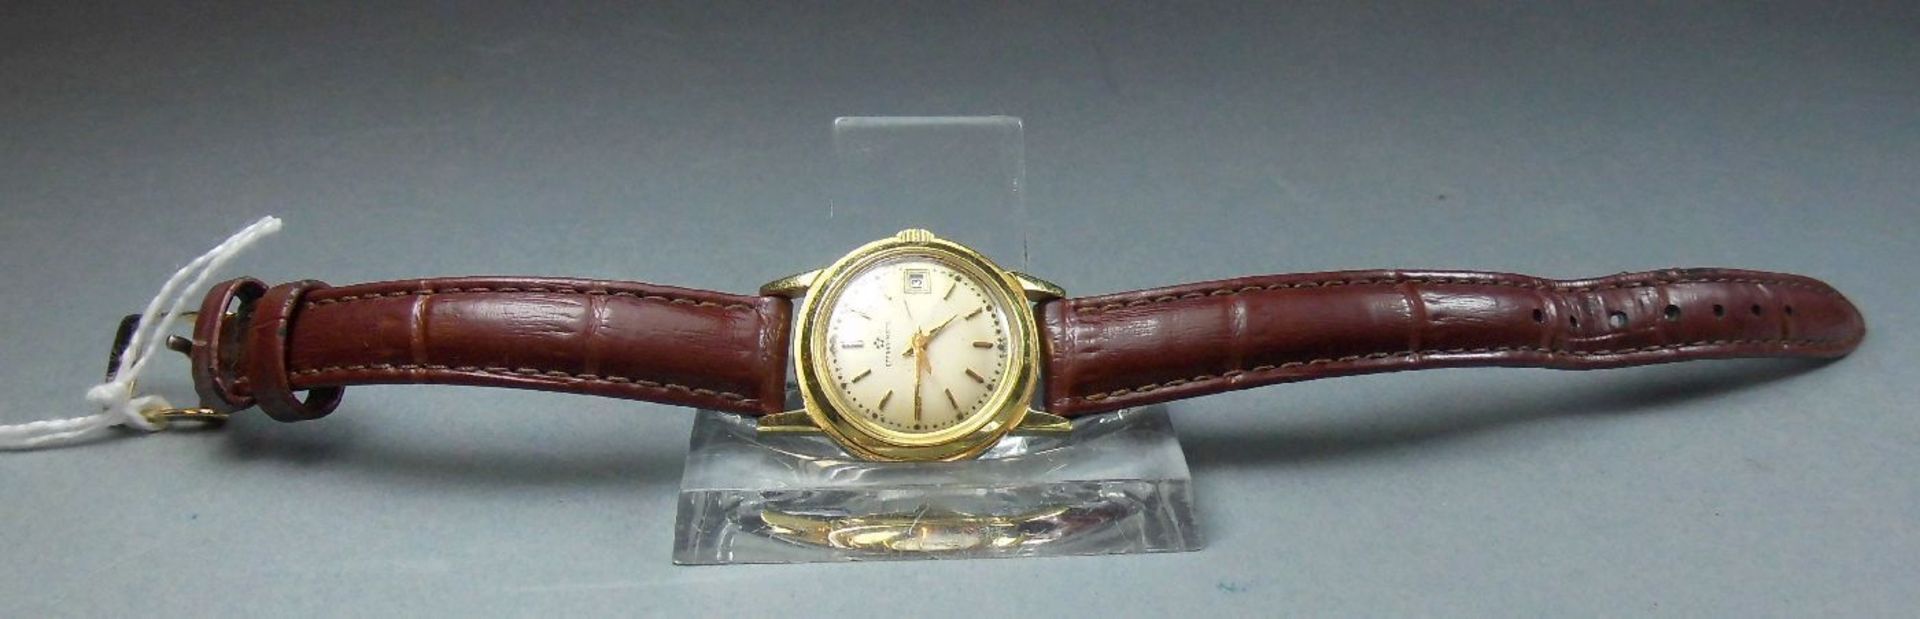 GOLDENE ETERNA - MATIC DAMEN - ARMBANDUHR / wristwatch, Automatik-Uhr, wohl 1960er Jahre, Gehäuse - Image 2 of 5